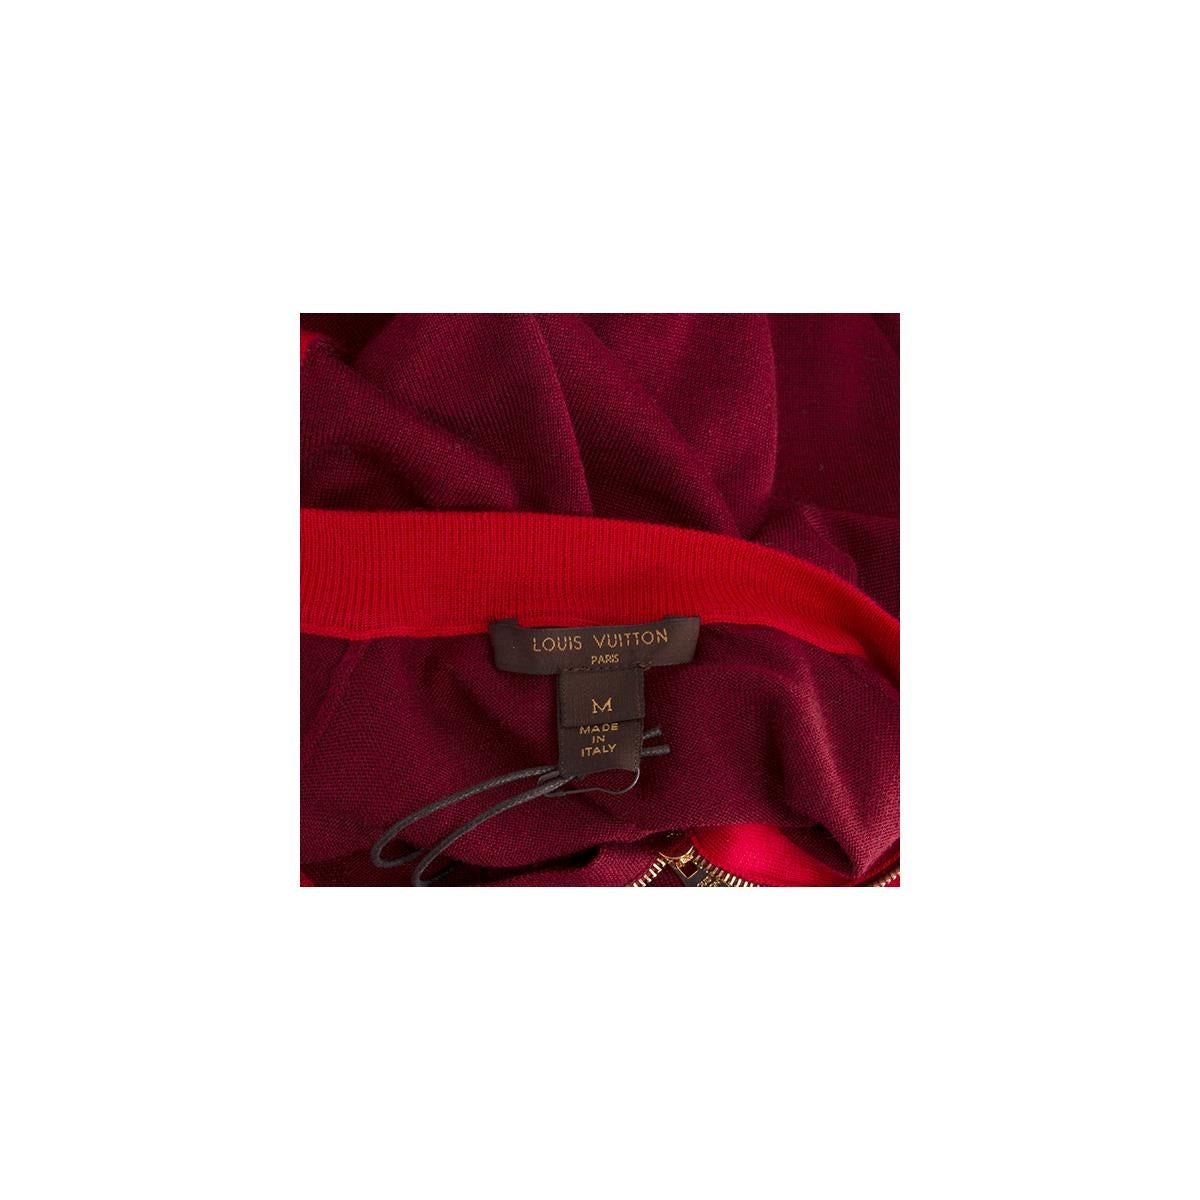 Red LOUIS VUITTON burgundy & red cashmere & wool ZIP NECK Sweater M